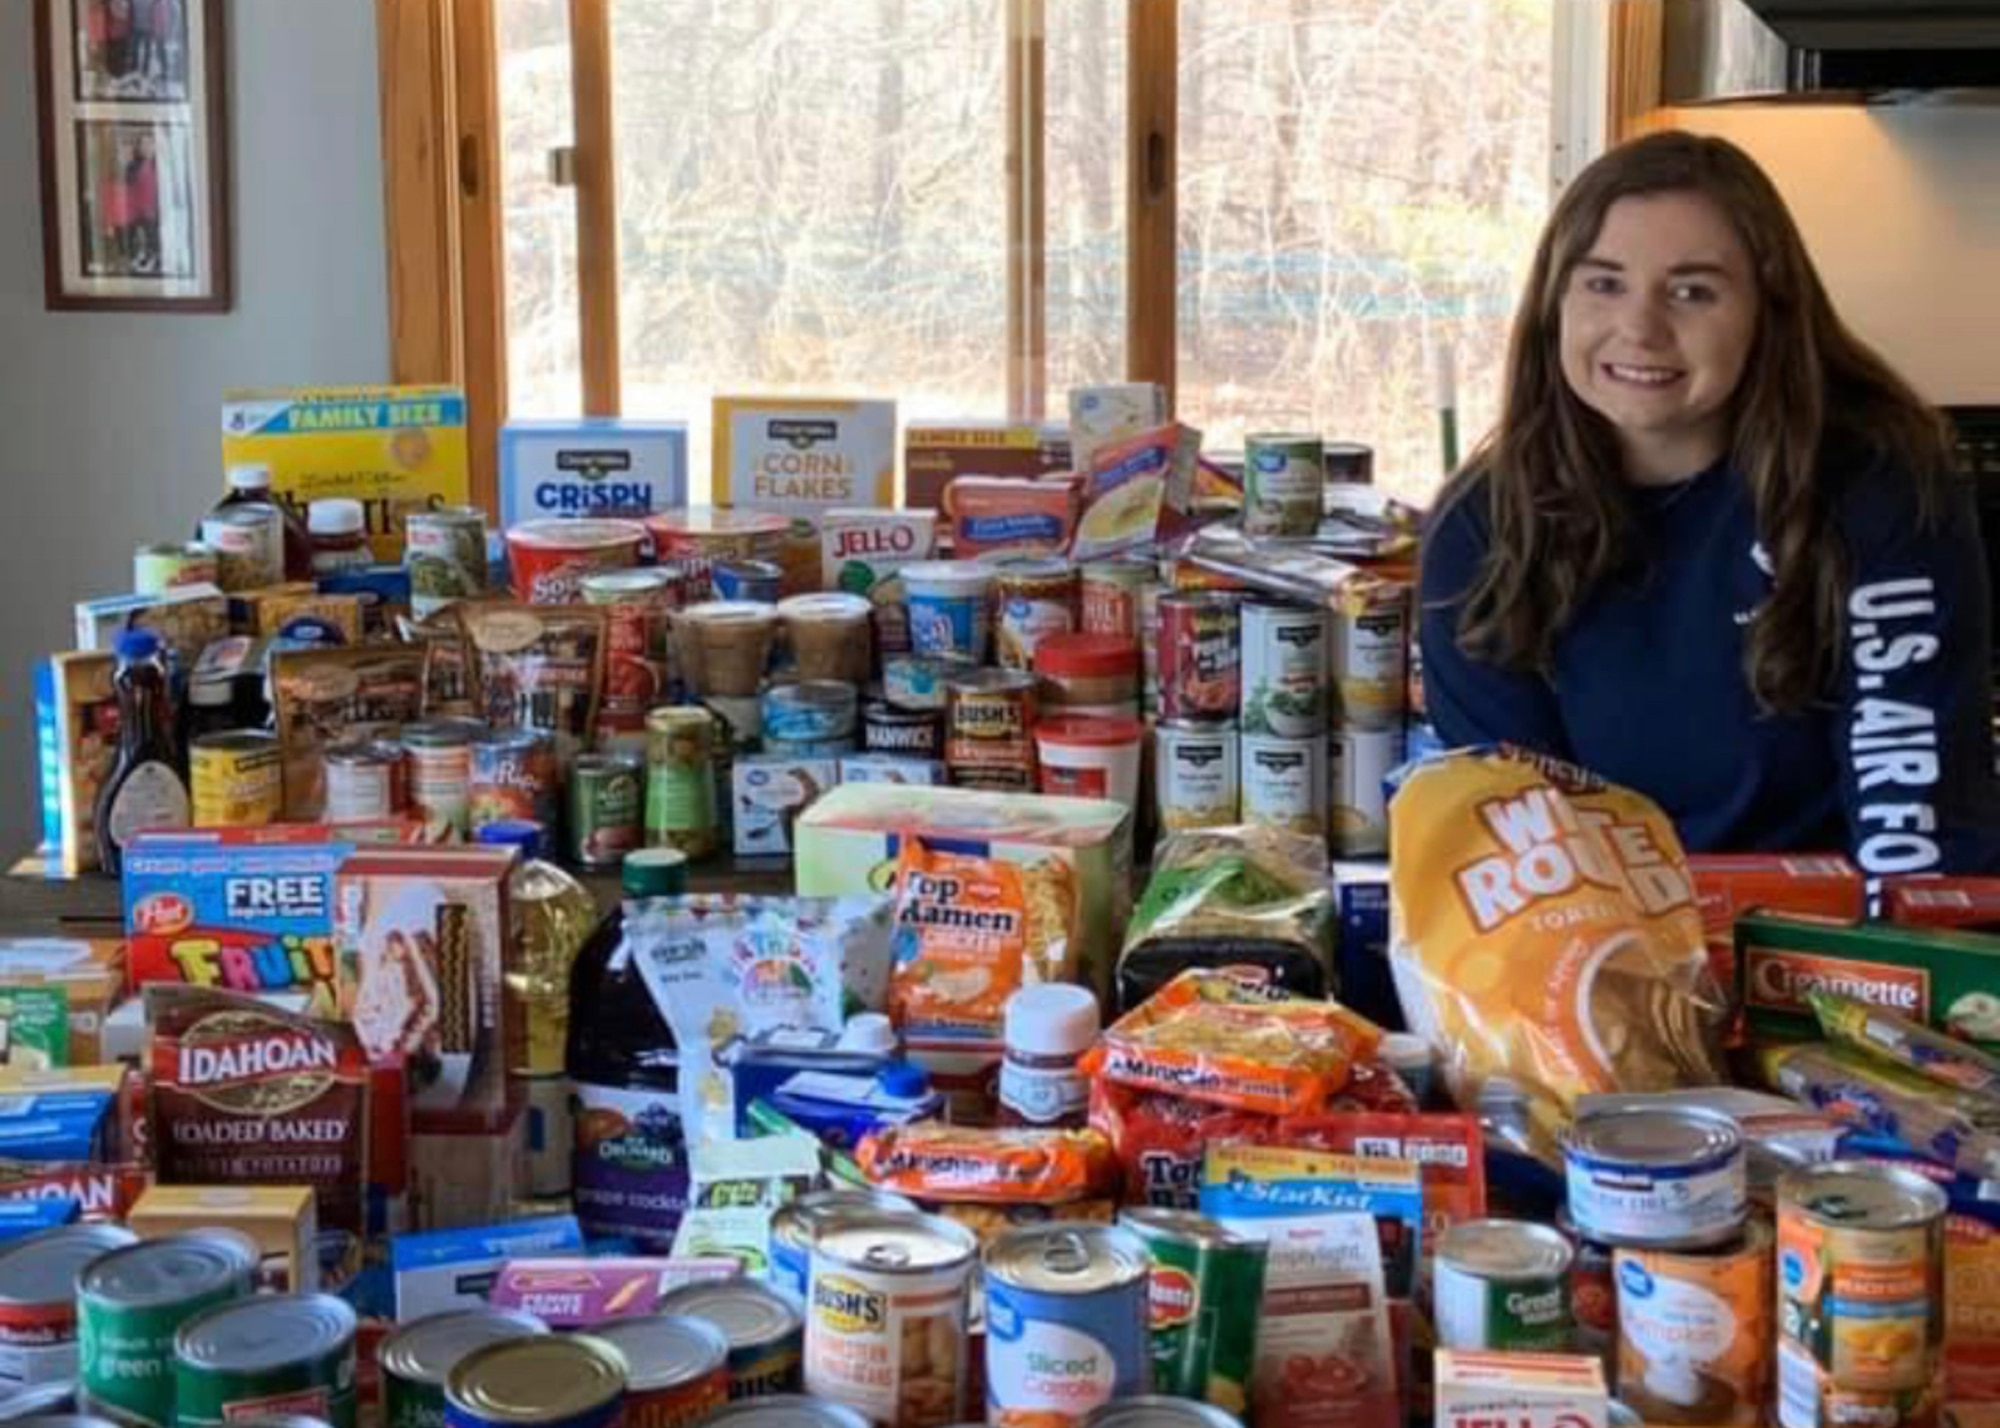 Student flight members donate to food pantries